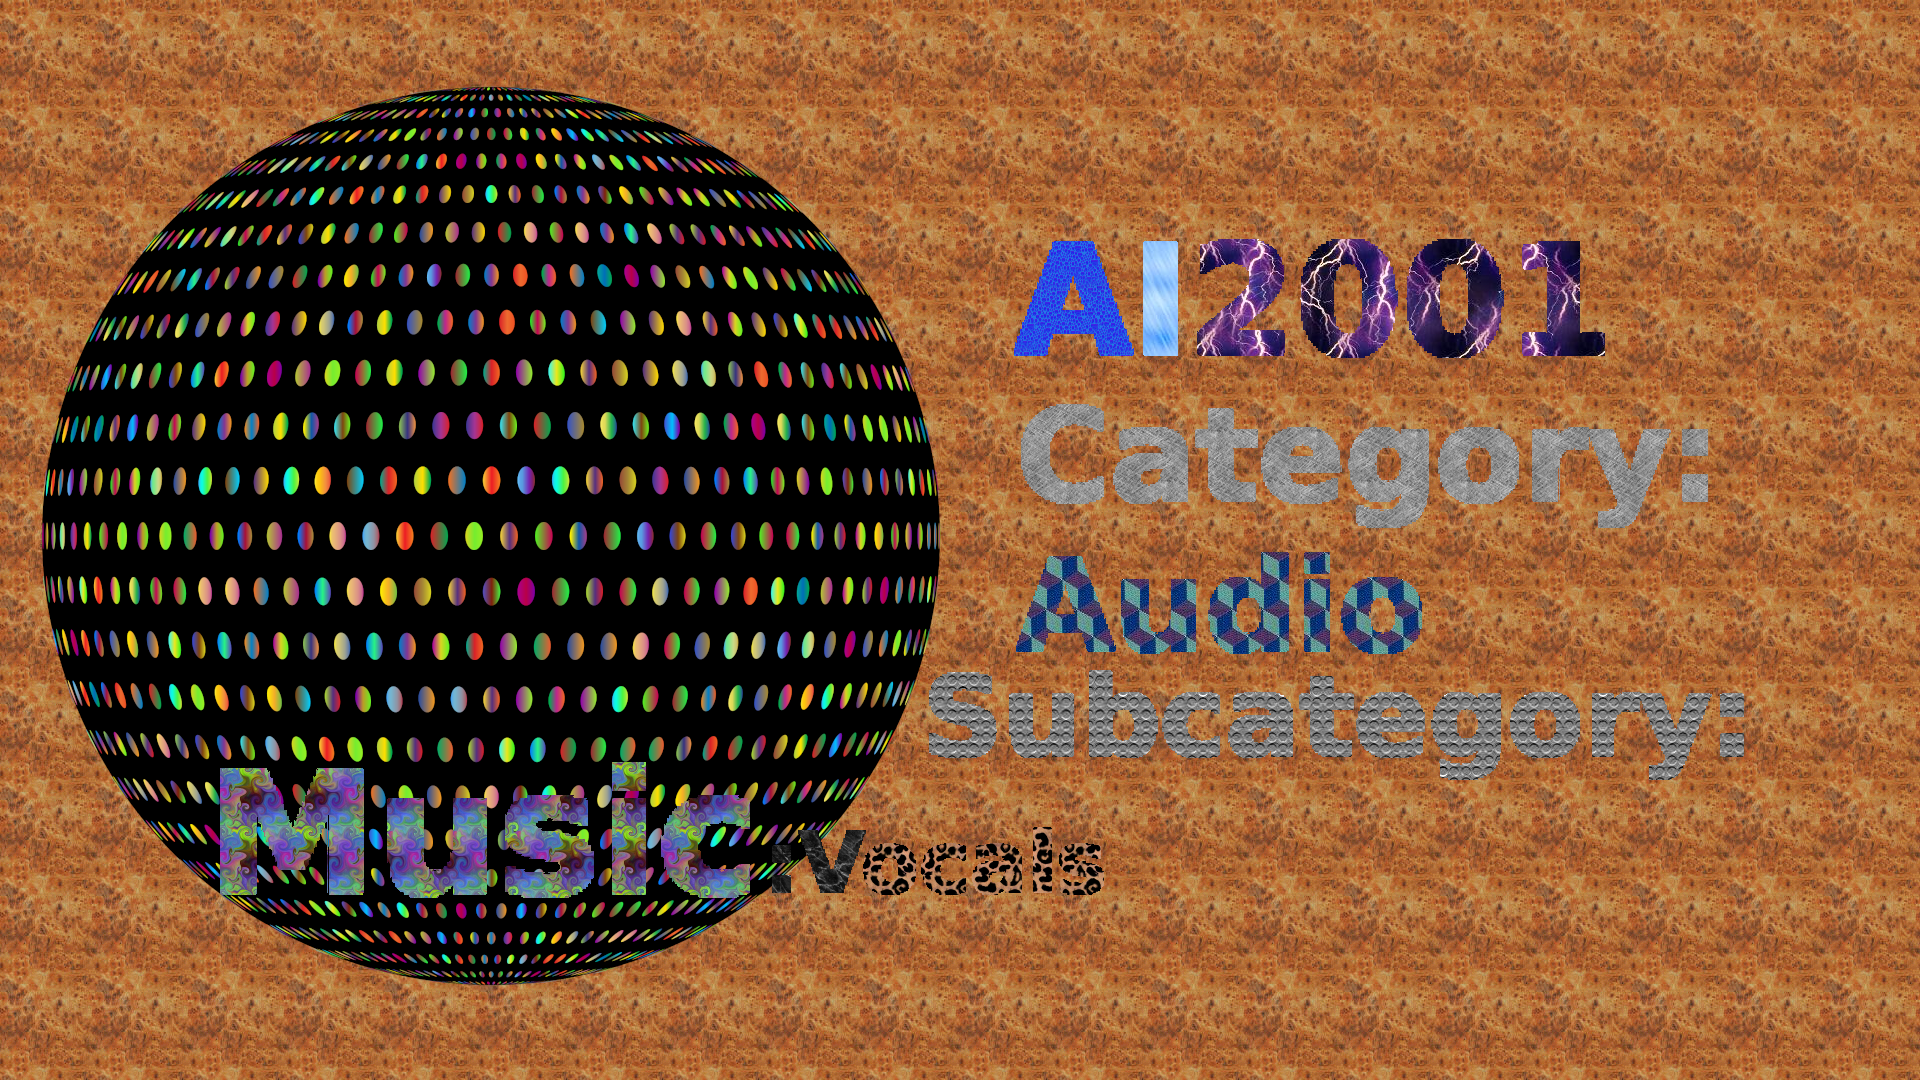 AI2001_Category-Audio-SC-Music-S-Vocals